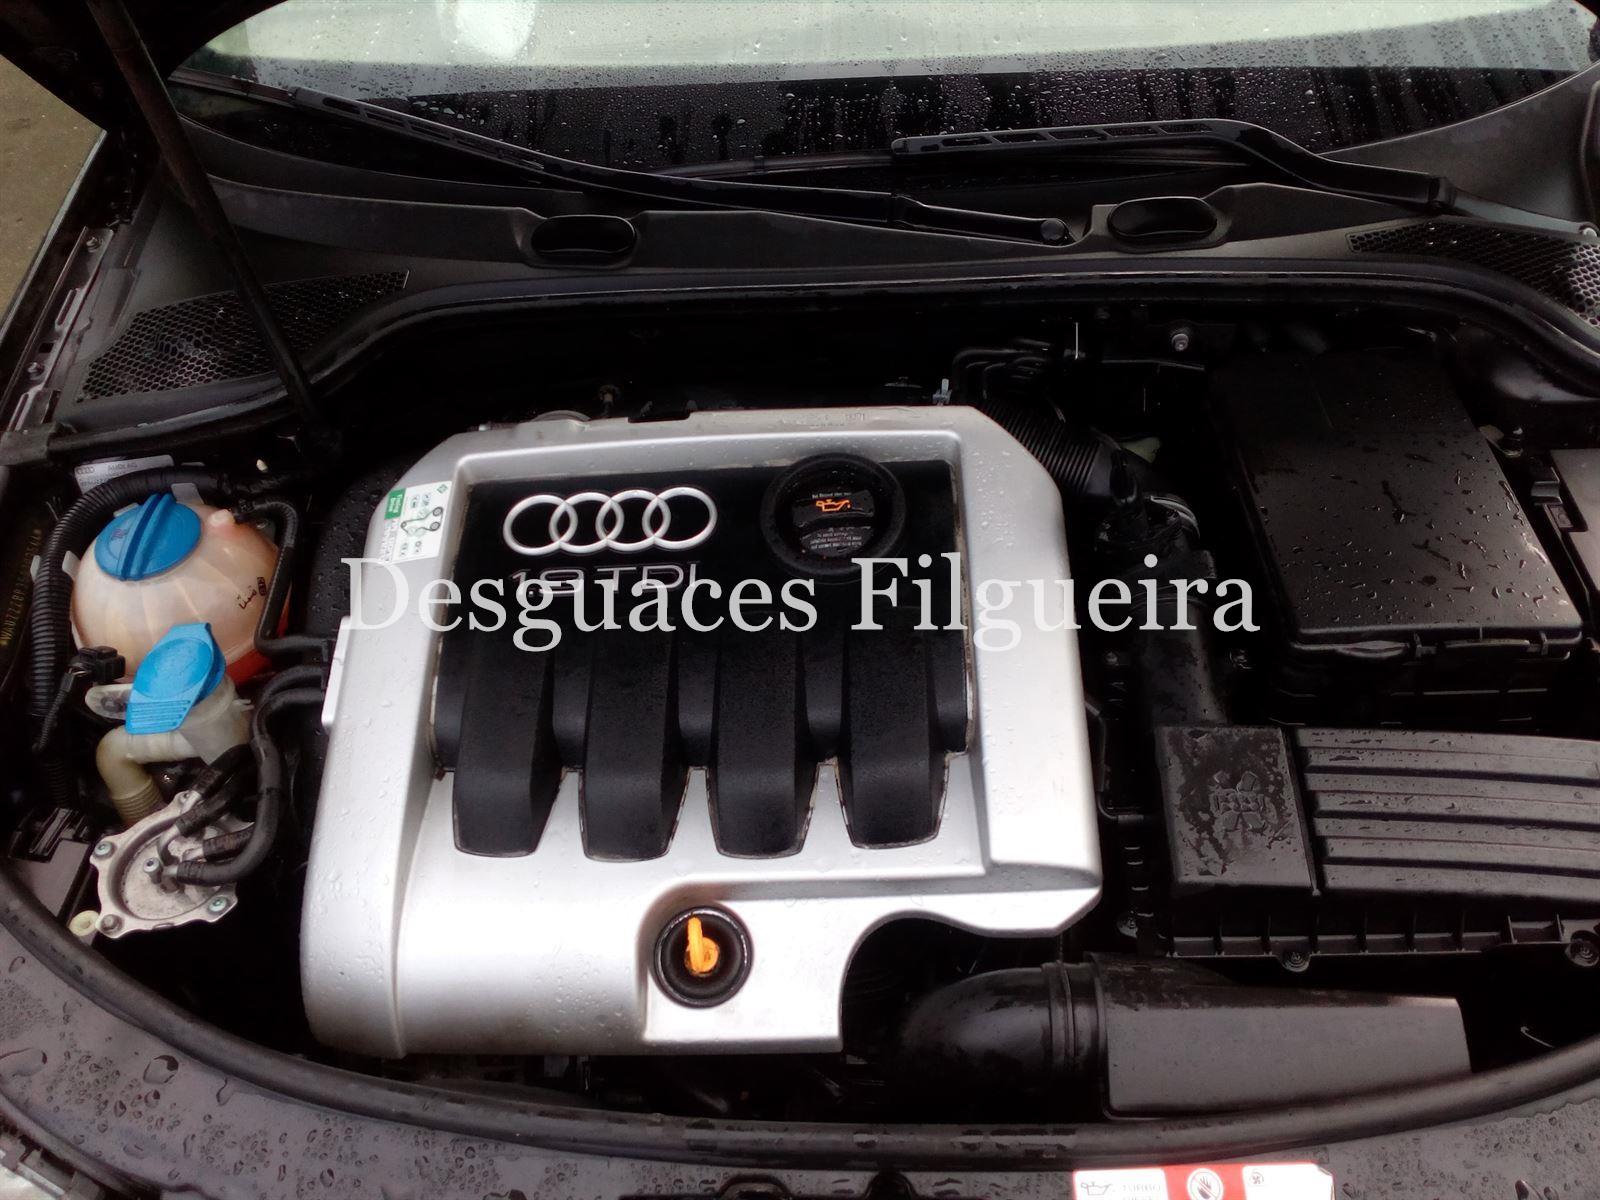 Despiece Audi A3 (8P) 1.9 TDI BKC - Imagen 7